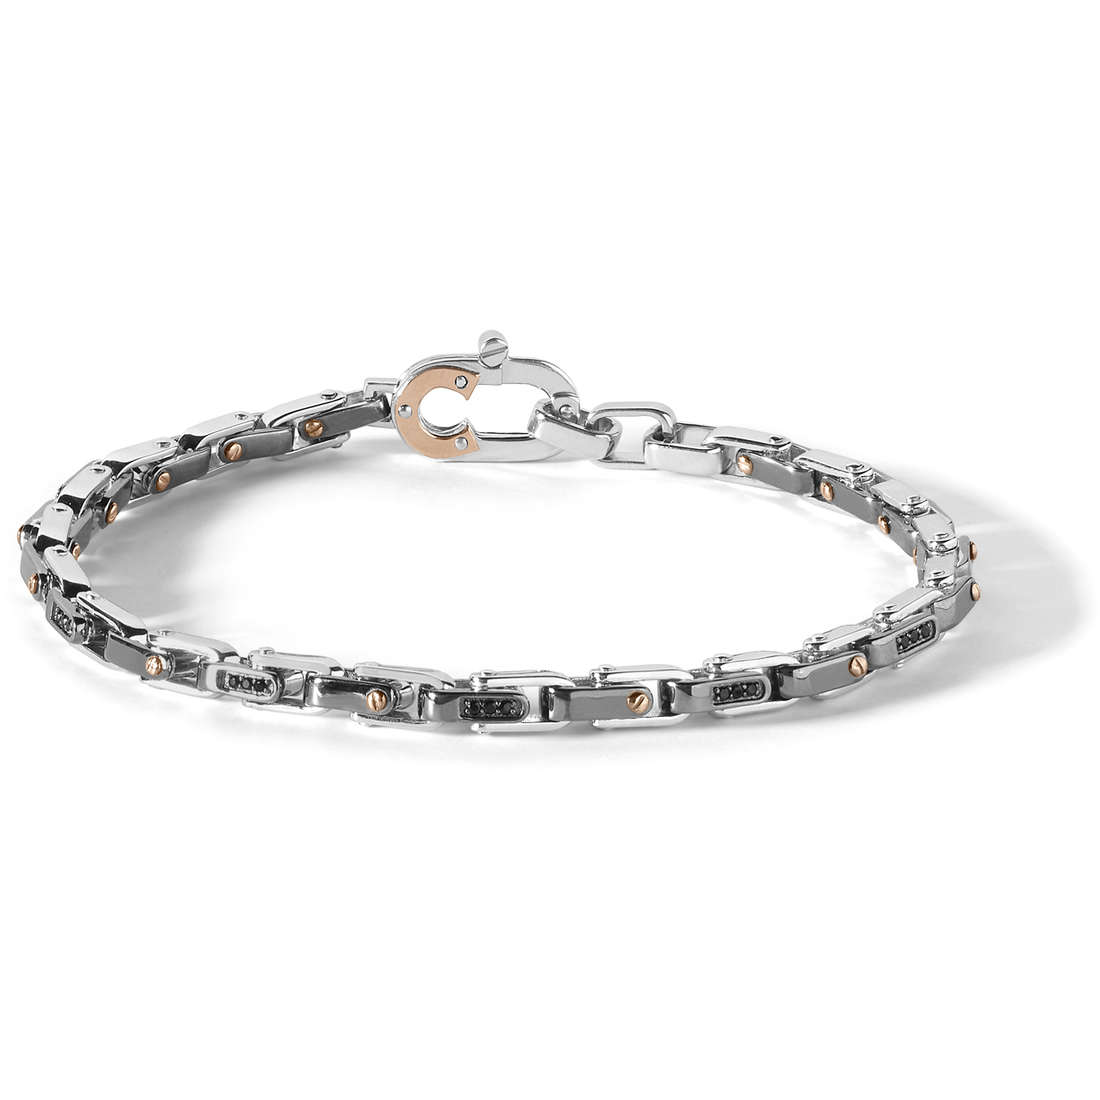 UBR 758 Reverse Jewelry Men’s Bracelet